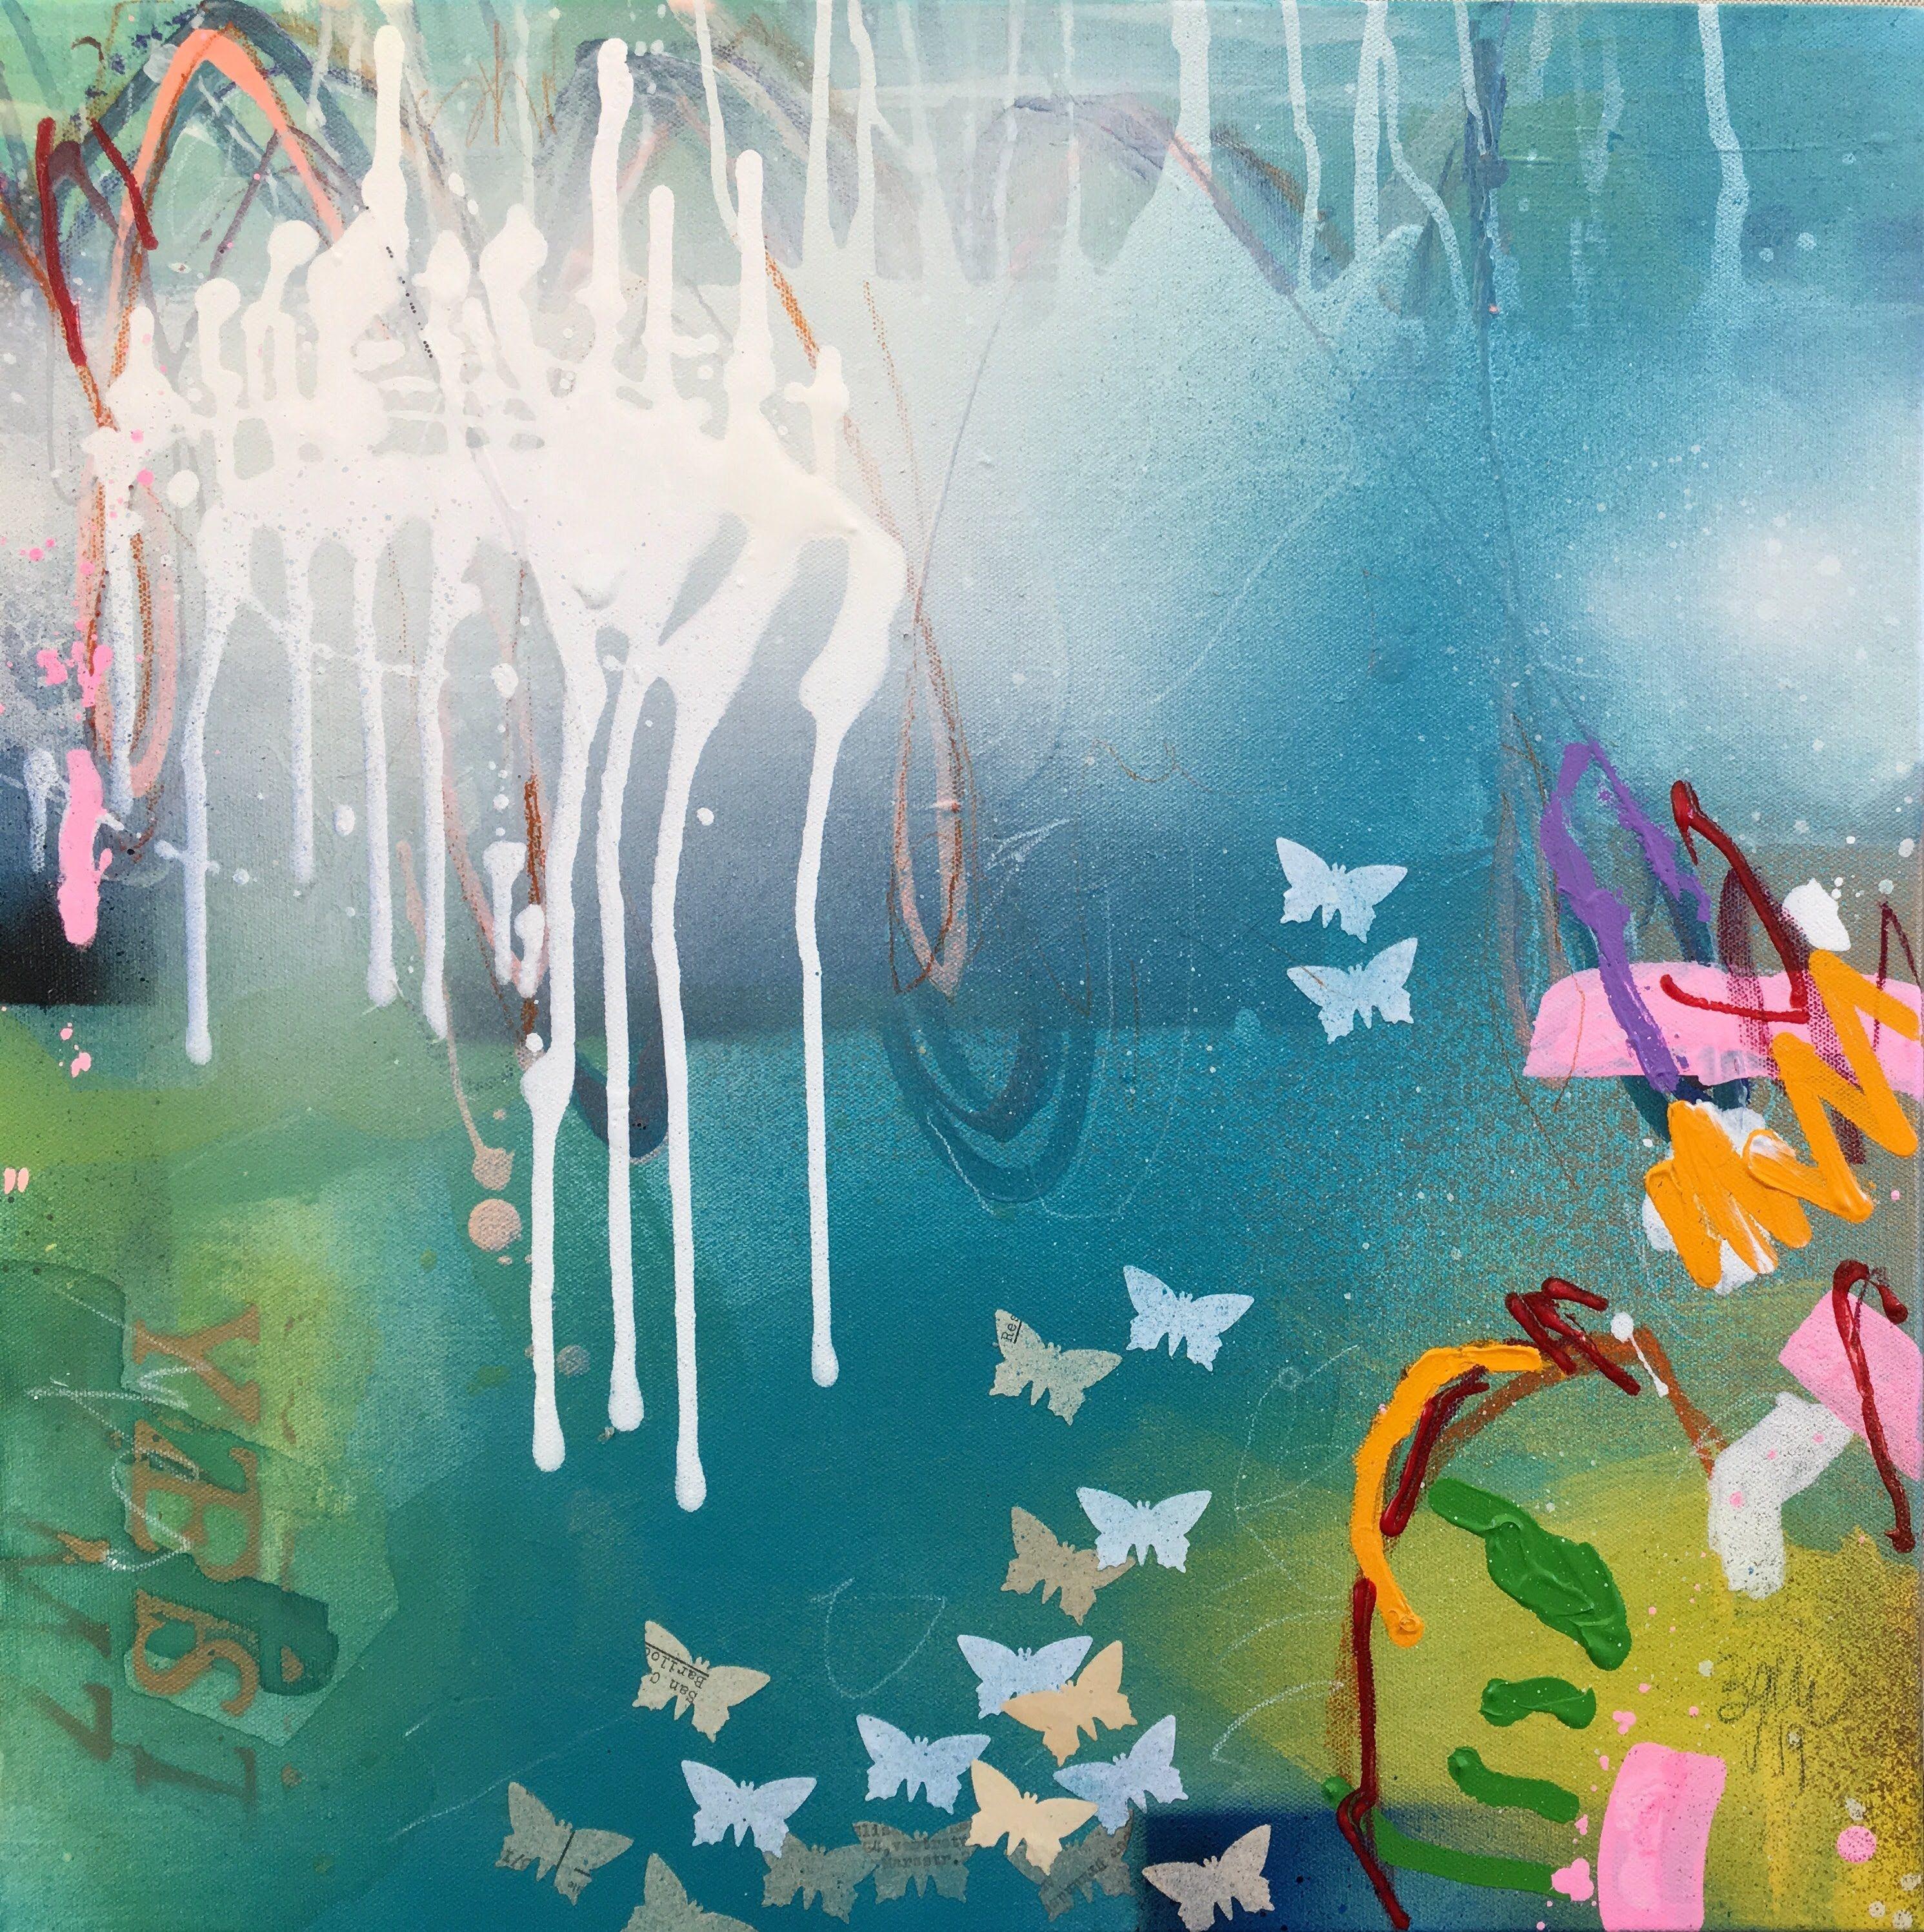 YES IV - inspired by Yoko Ono, Mixed Media on Canvas - Mixed Media Art by Bea Garding Schubert